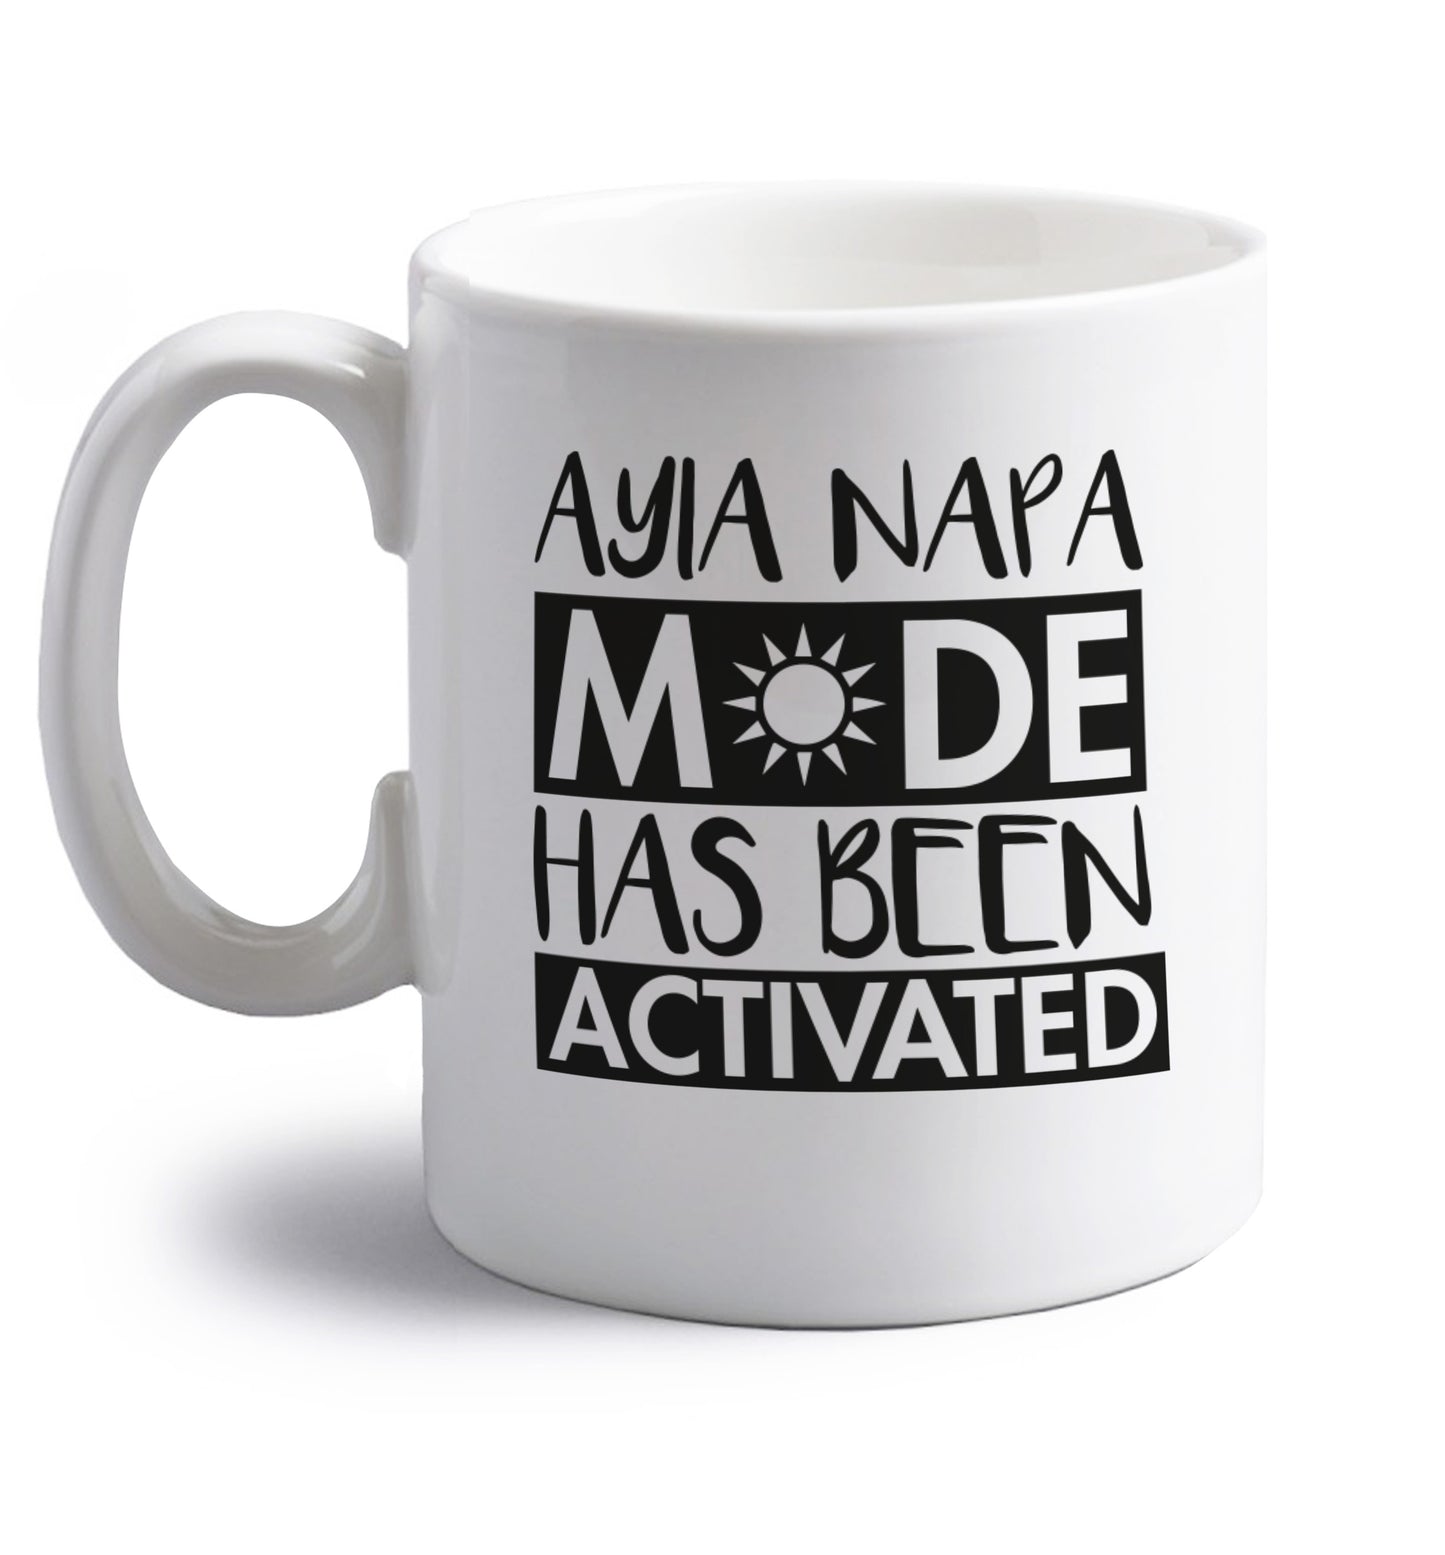 Aiya Napa mode has been activated right handed white ceramic mug 